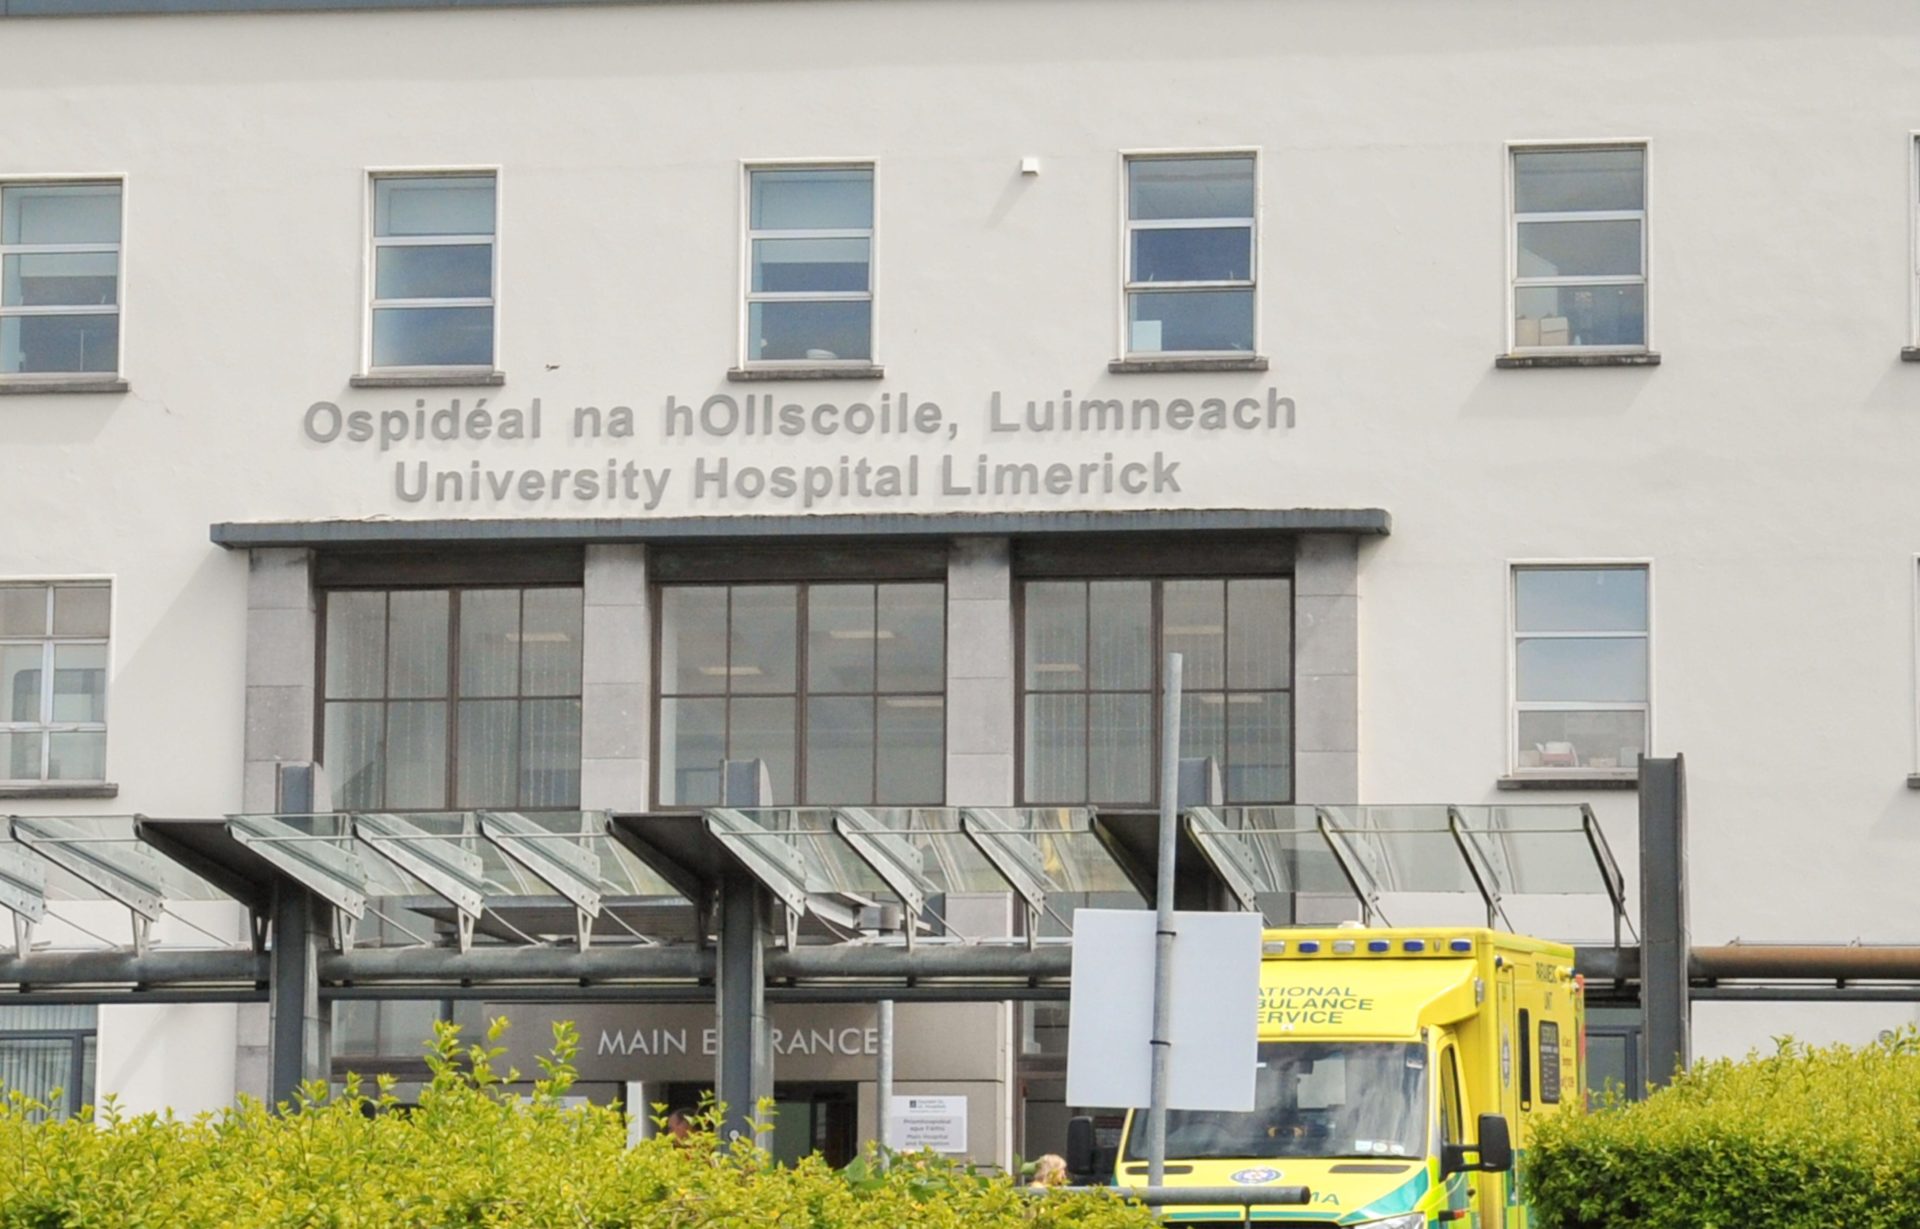 University Hospital Limerick, 29-7-23.